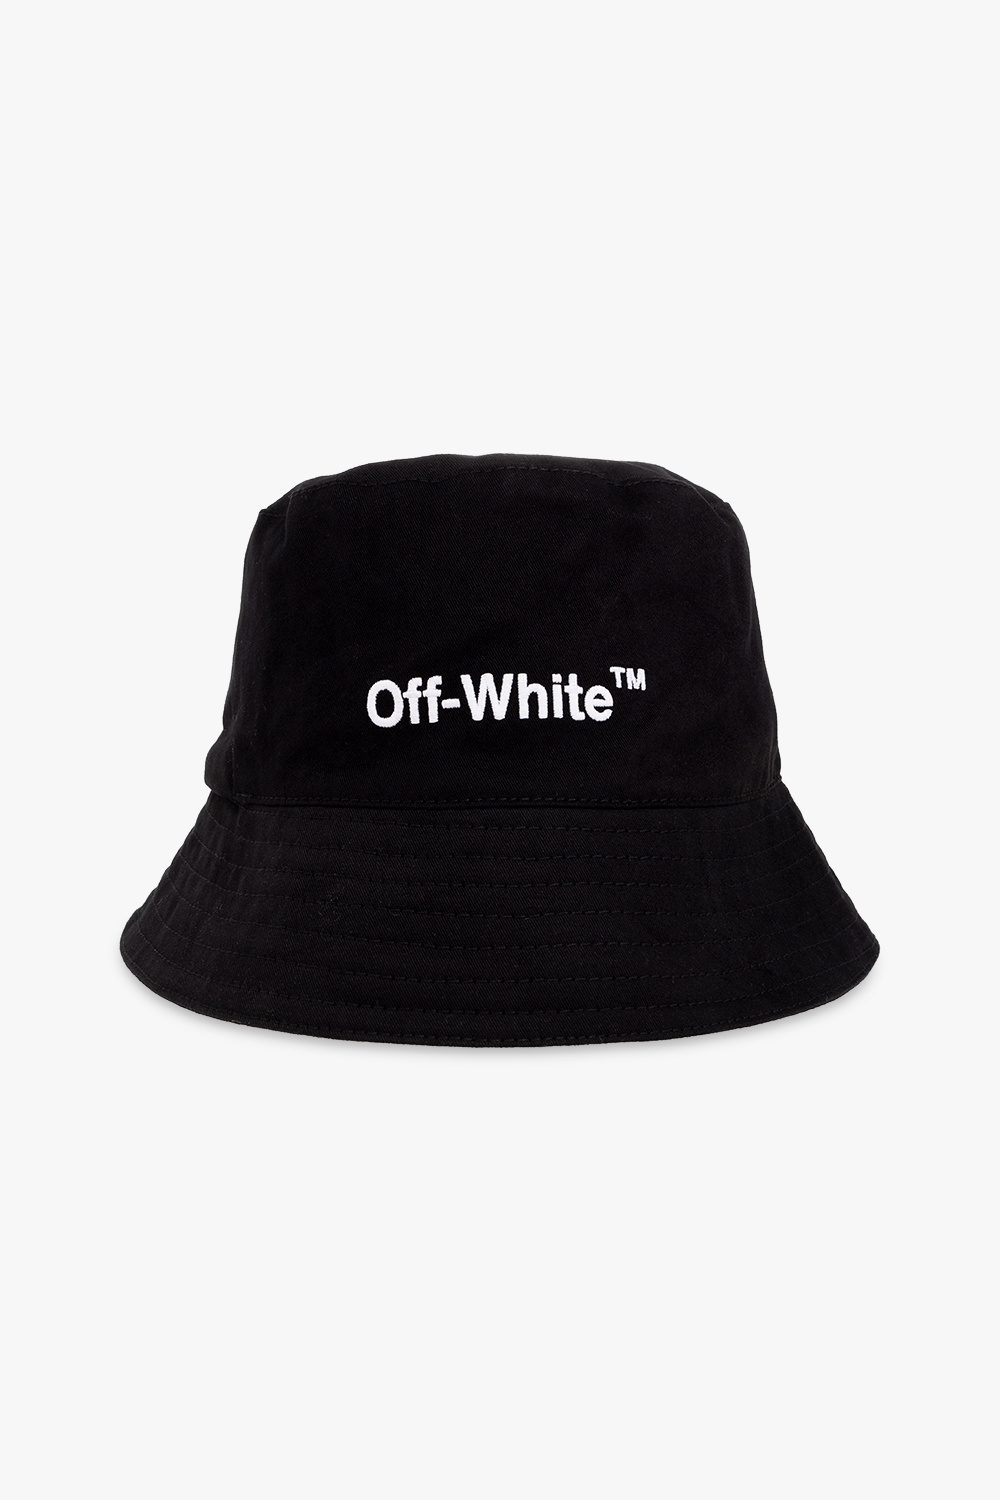 Off-White floral-print drop-brim hat